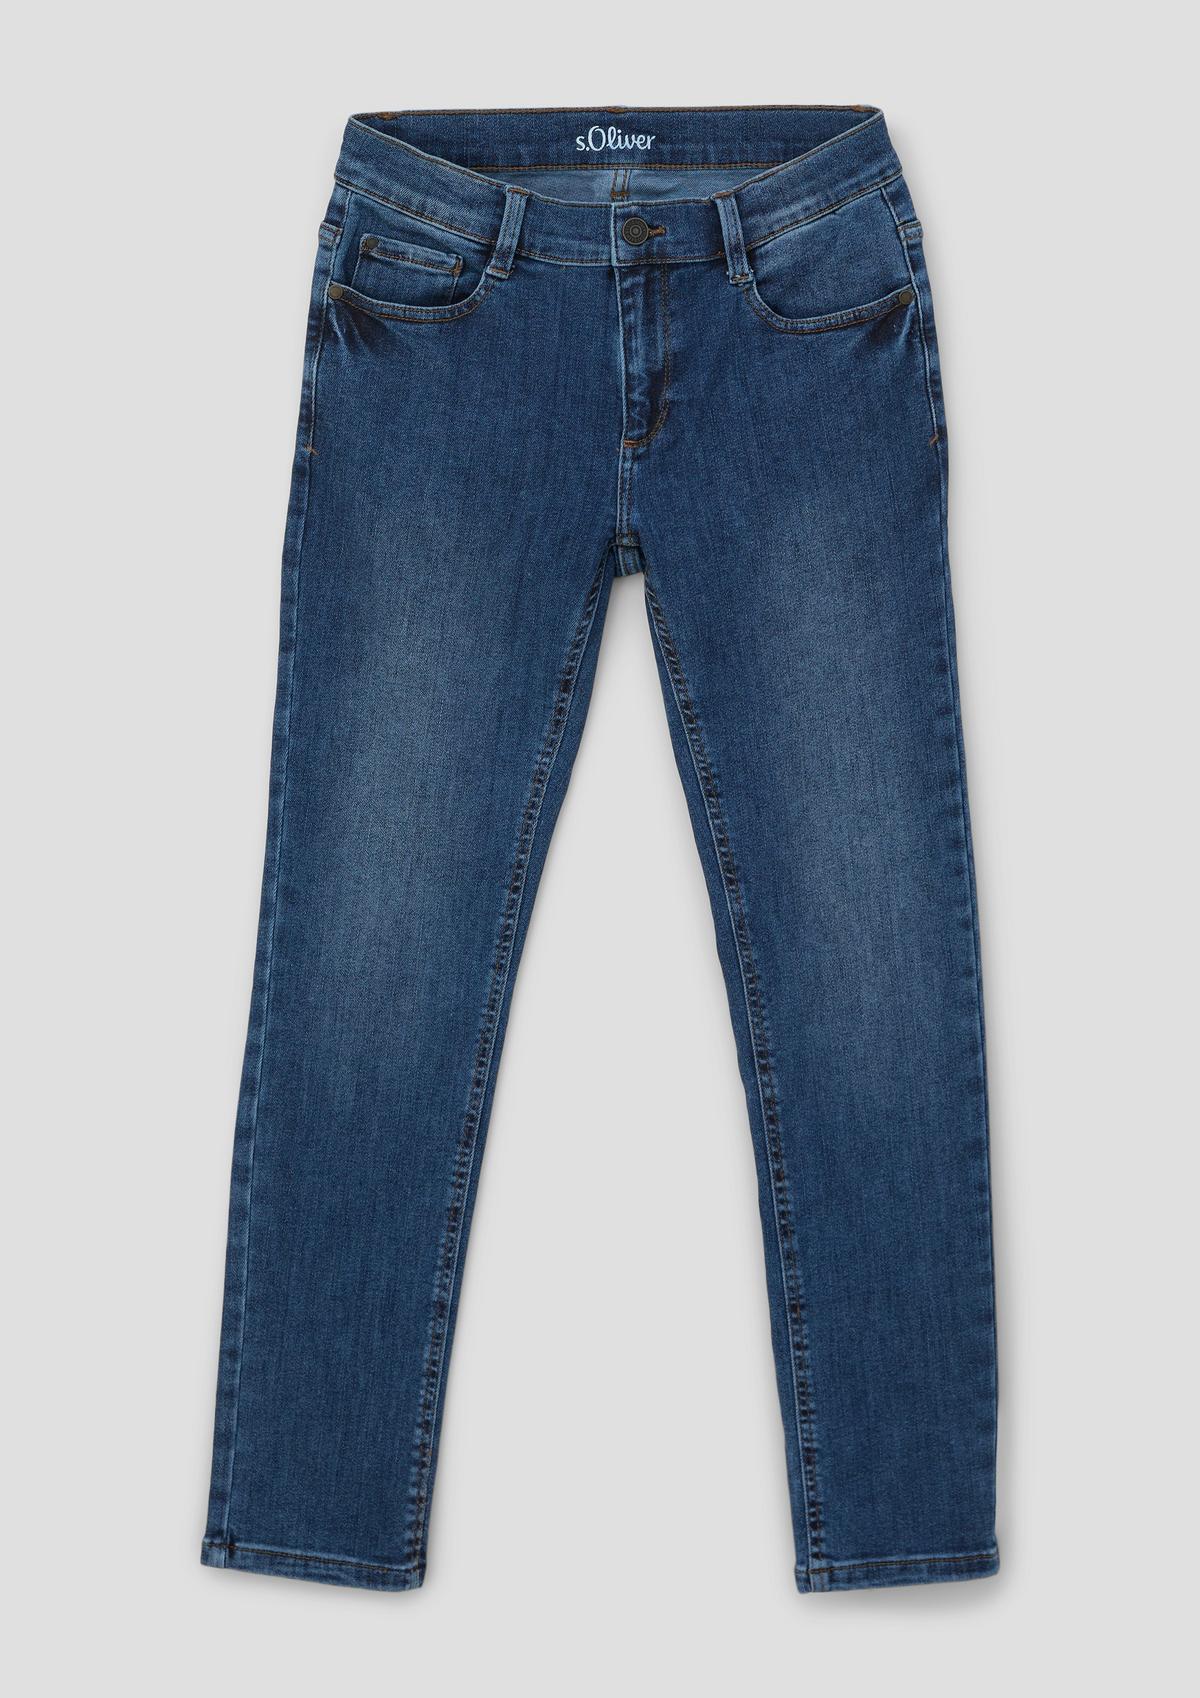 Jeans Seattle / slim fit / mid rise / skinny leg